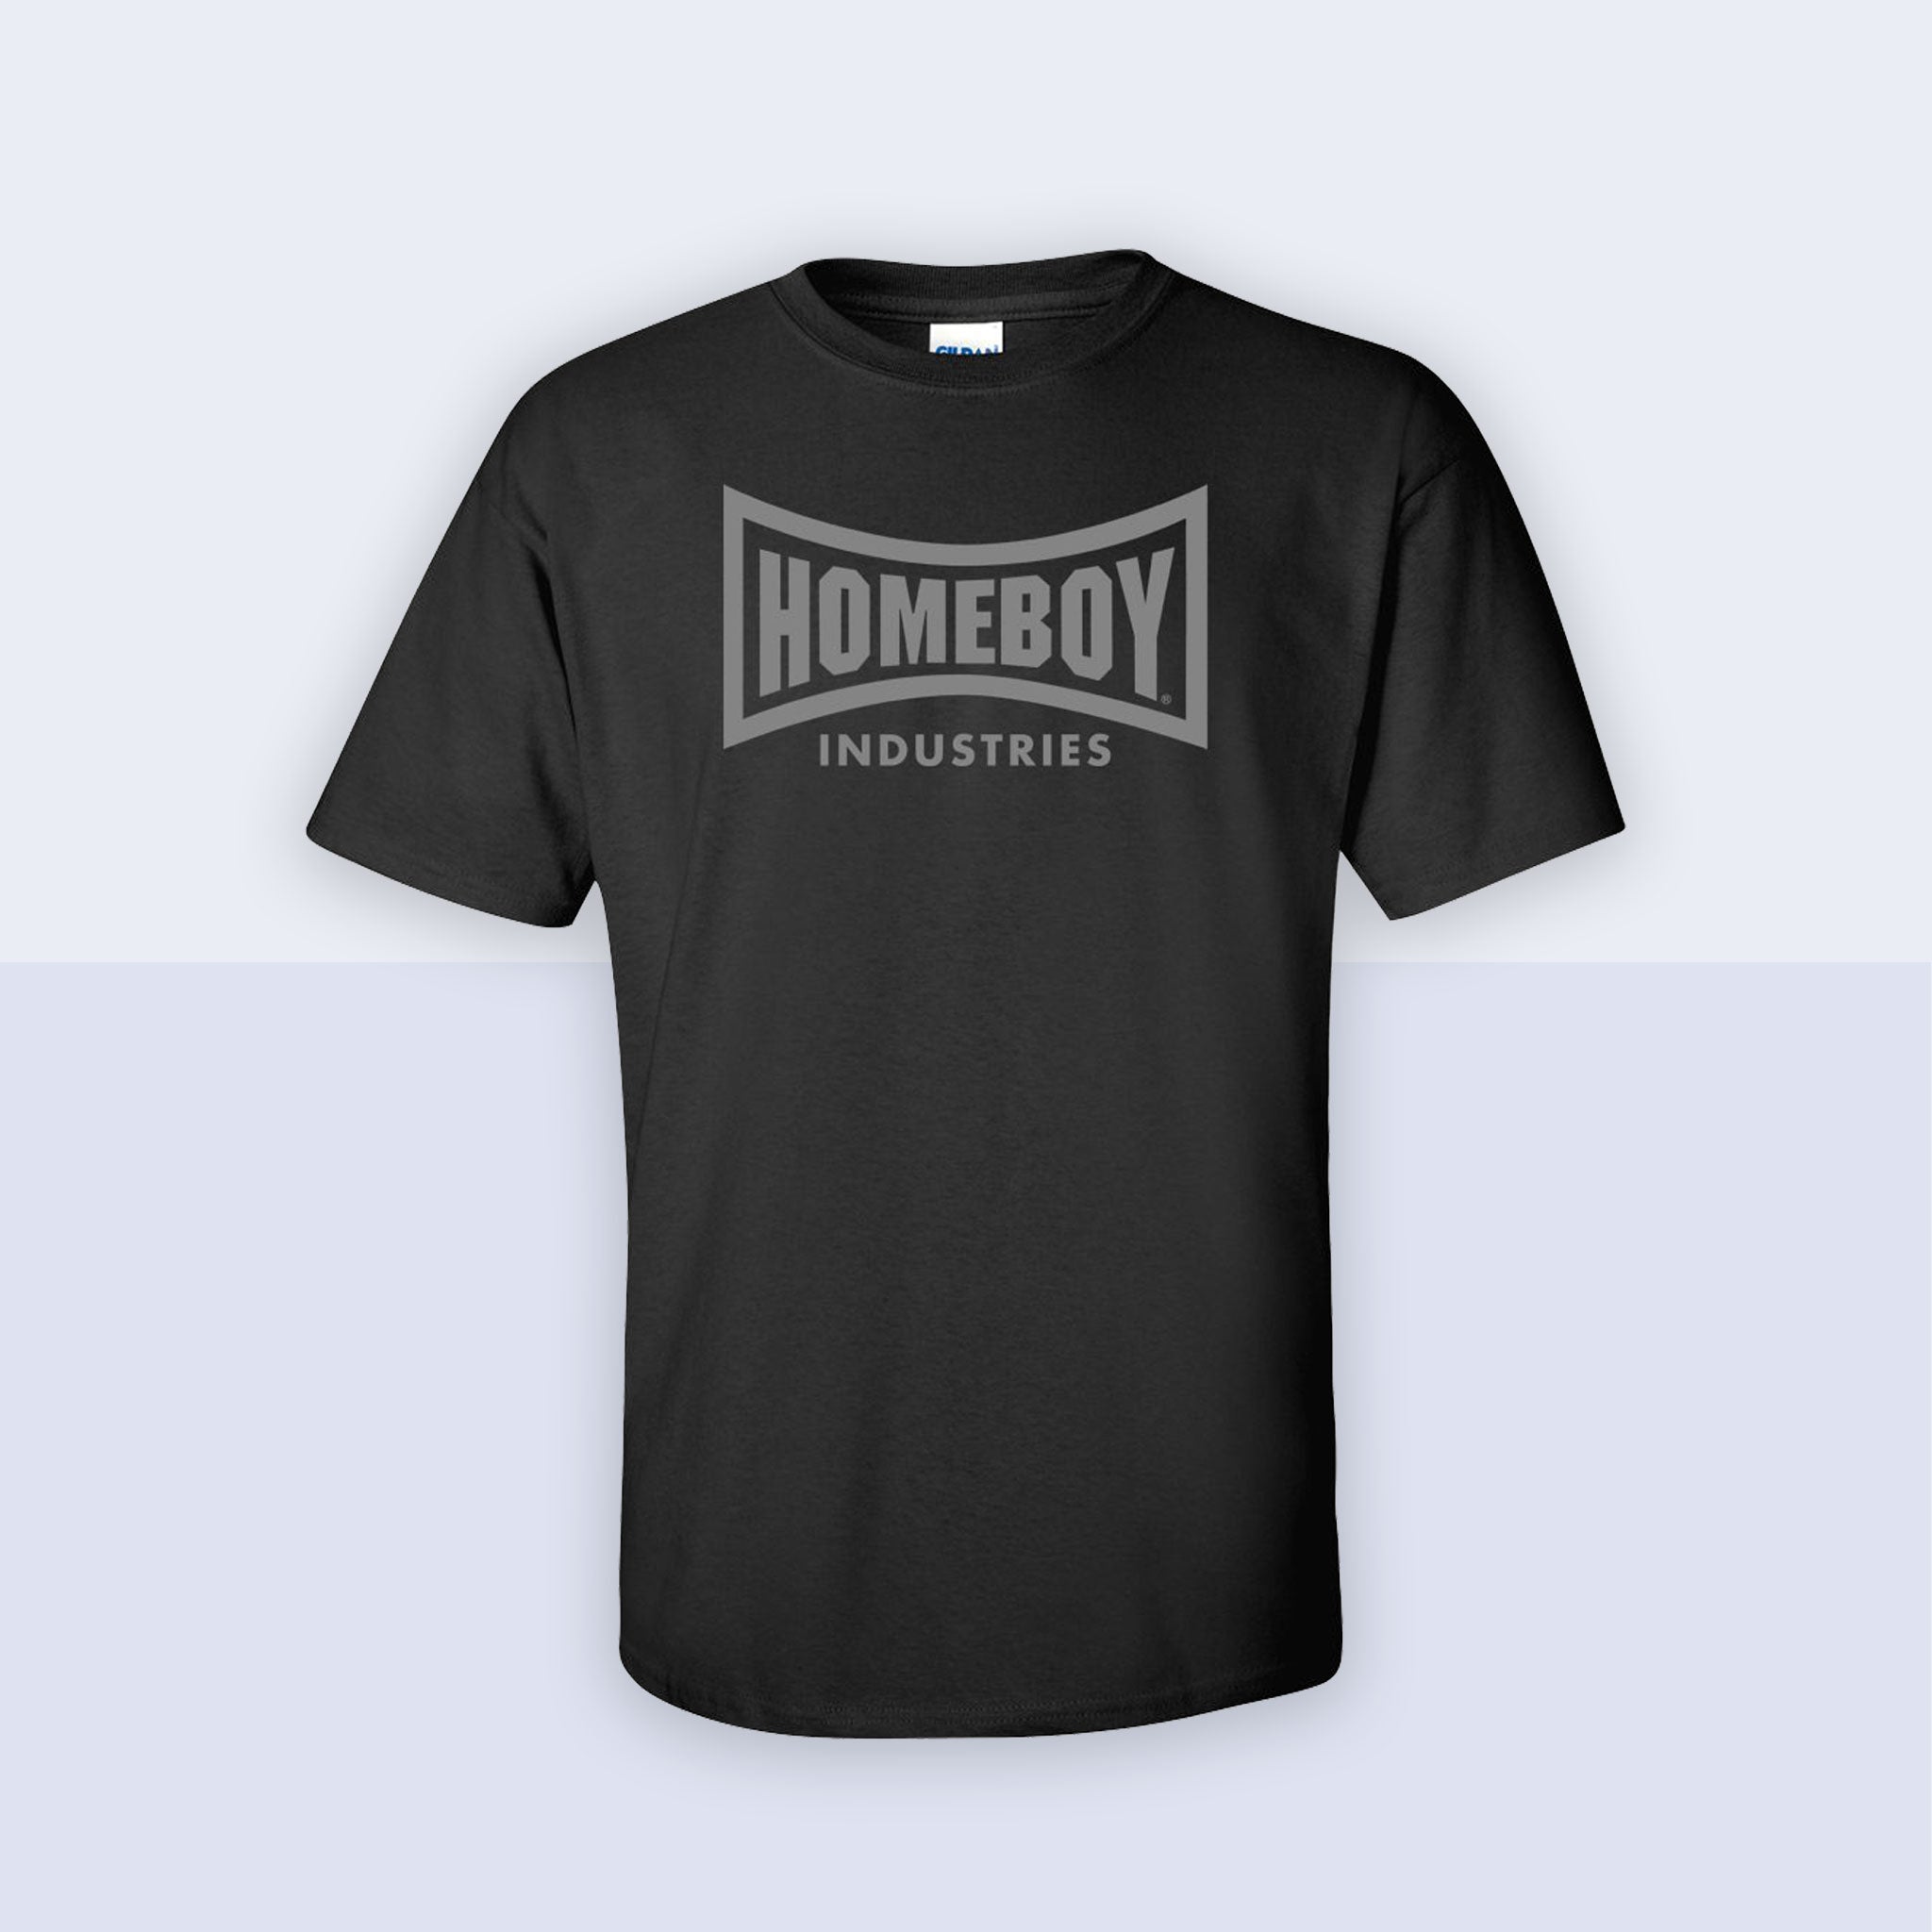 Homeboy-T-Shirt_black.jpg